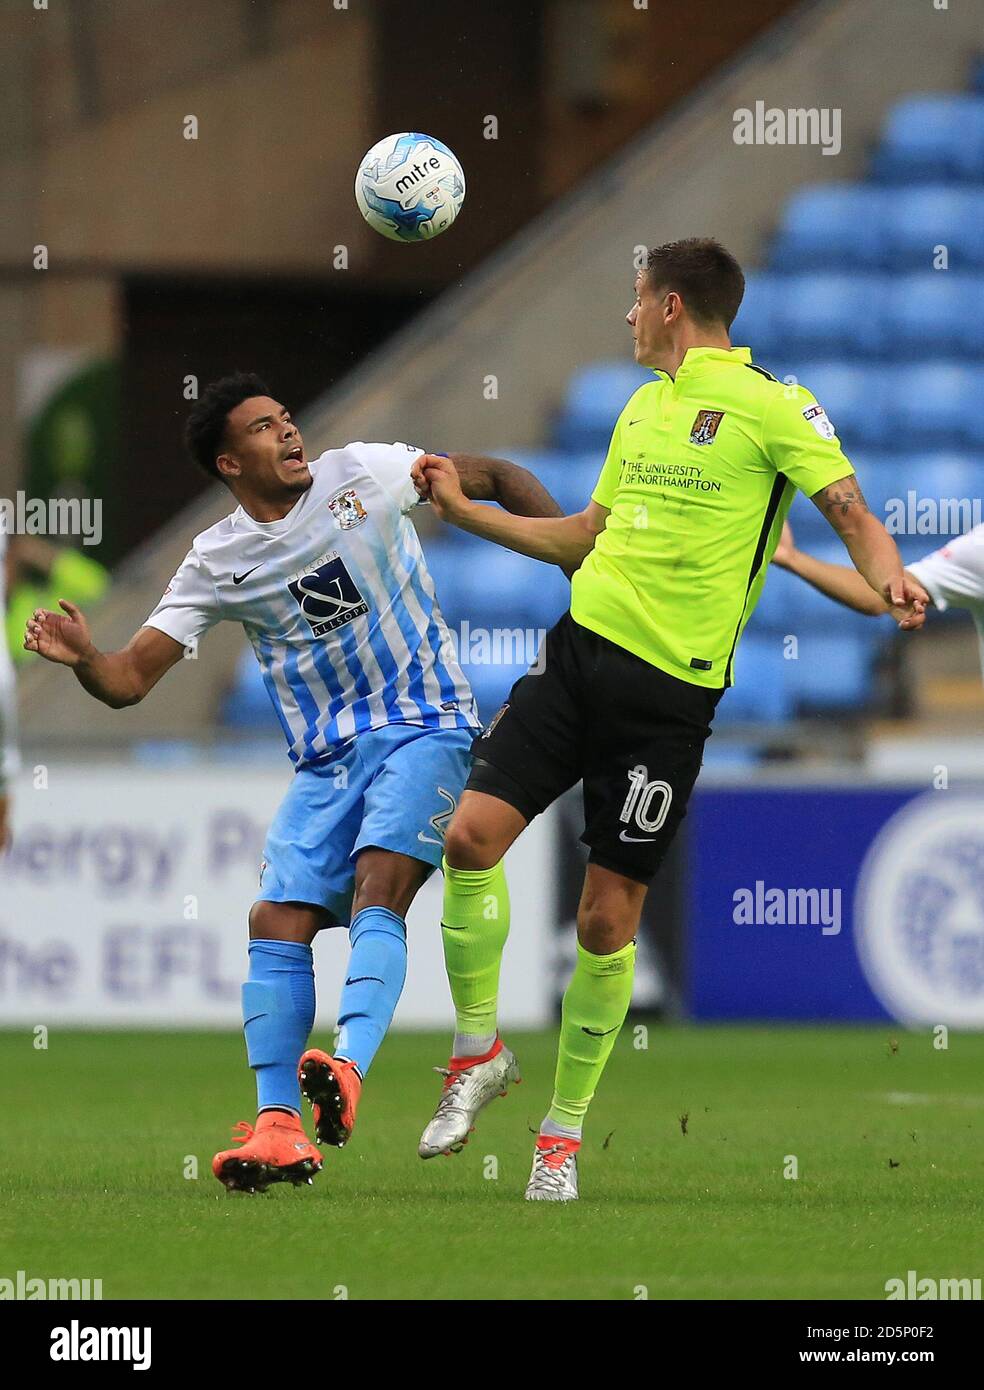 Jordan Willia von Coventry City (links) kämpft mit Alex von Northampton Town Revell Stockfoto